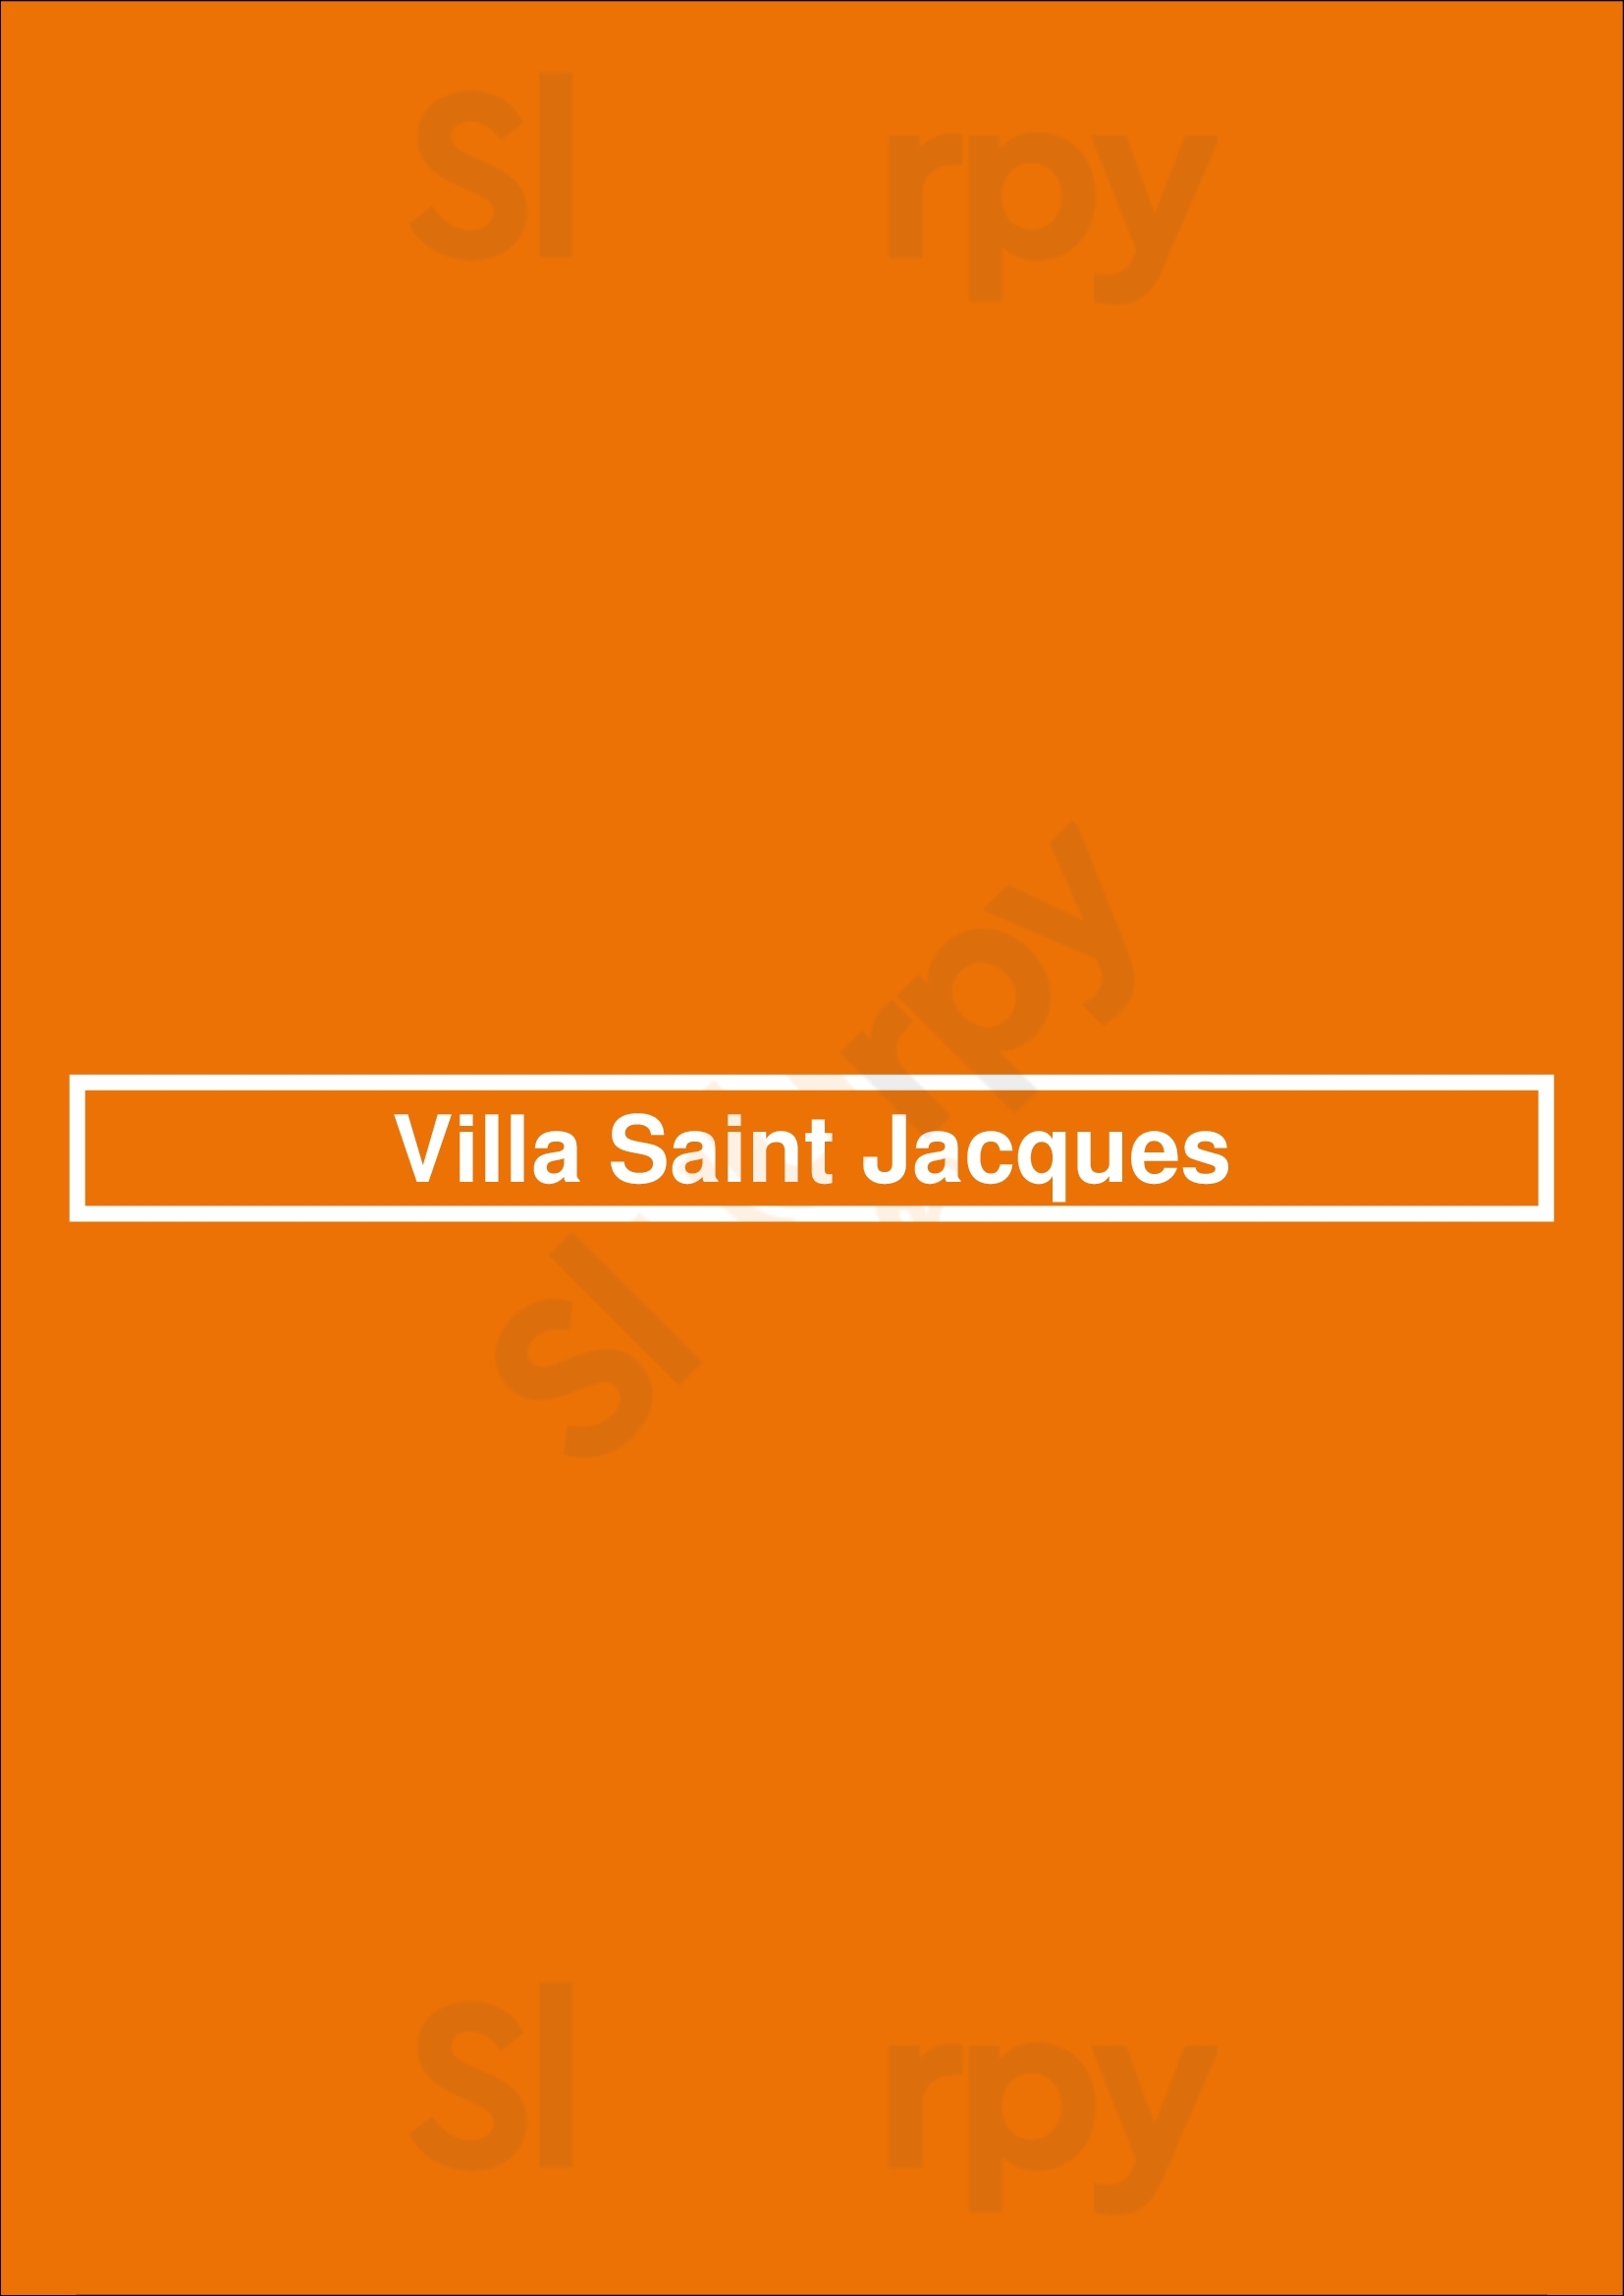 Villa Saint Jacques Paris Menu - 1